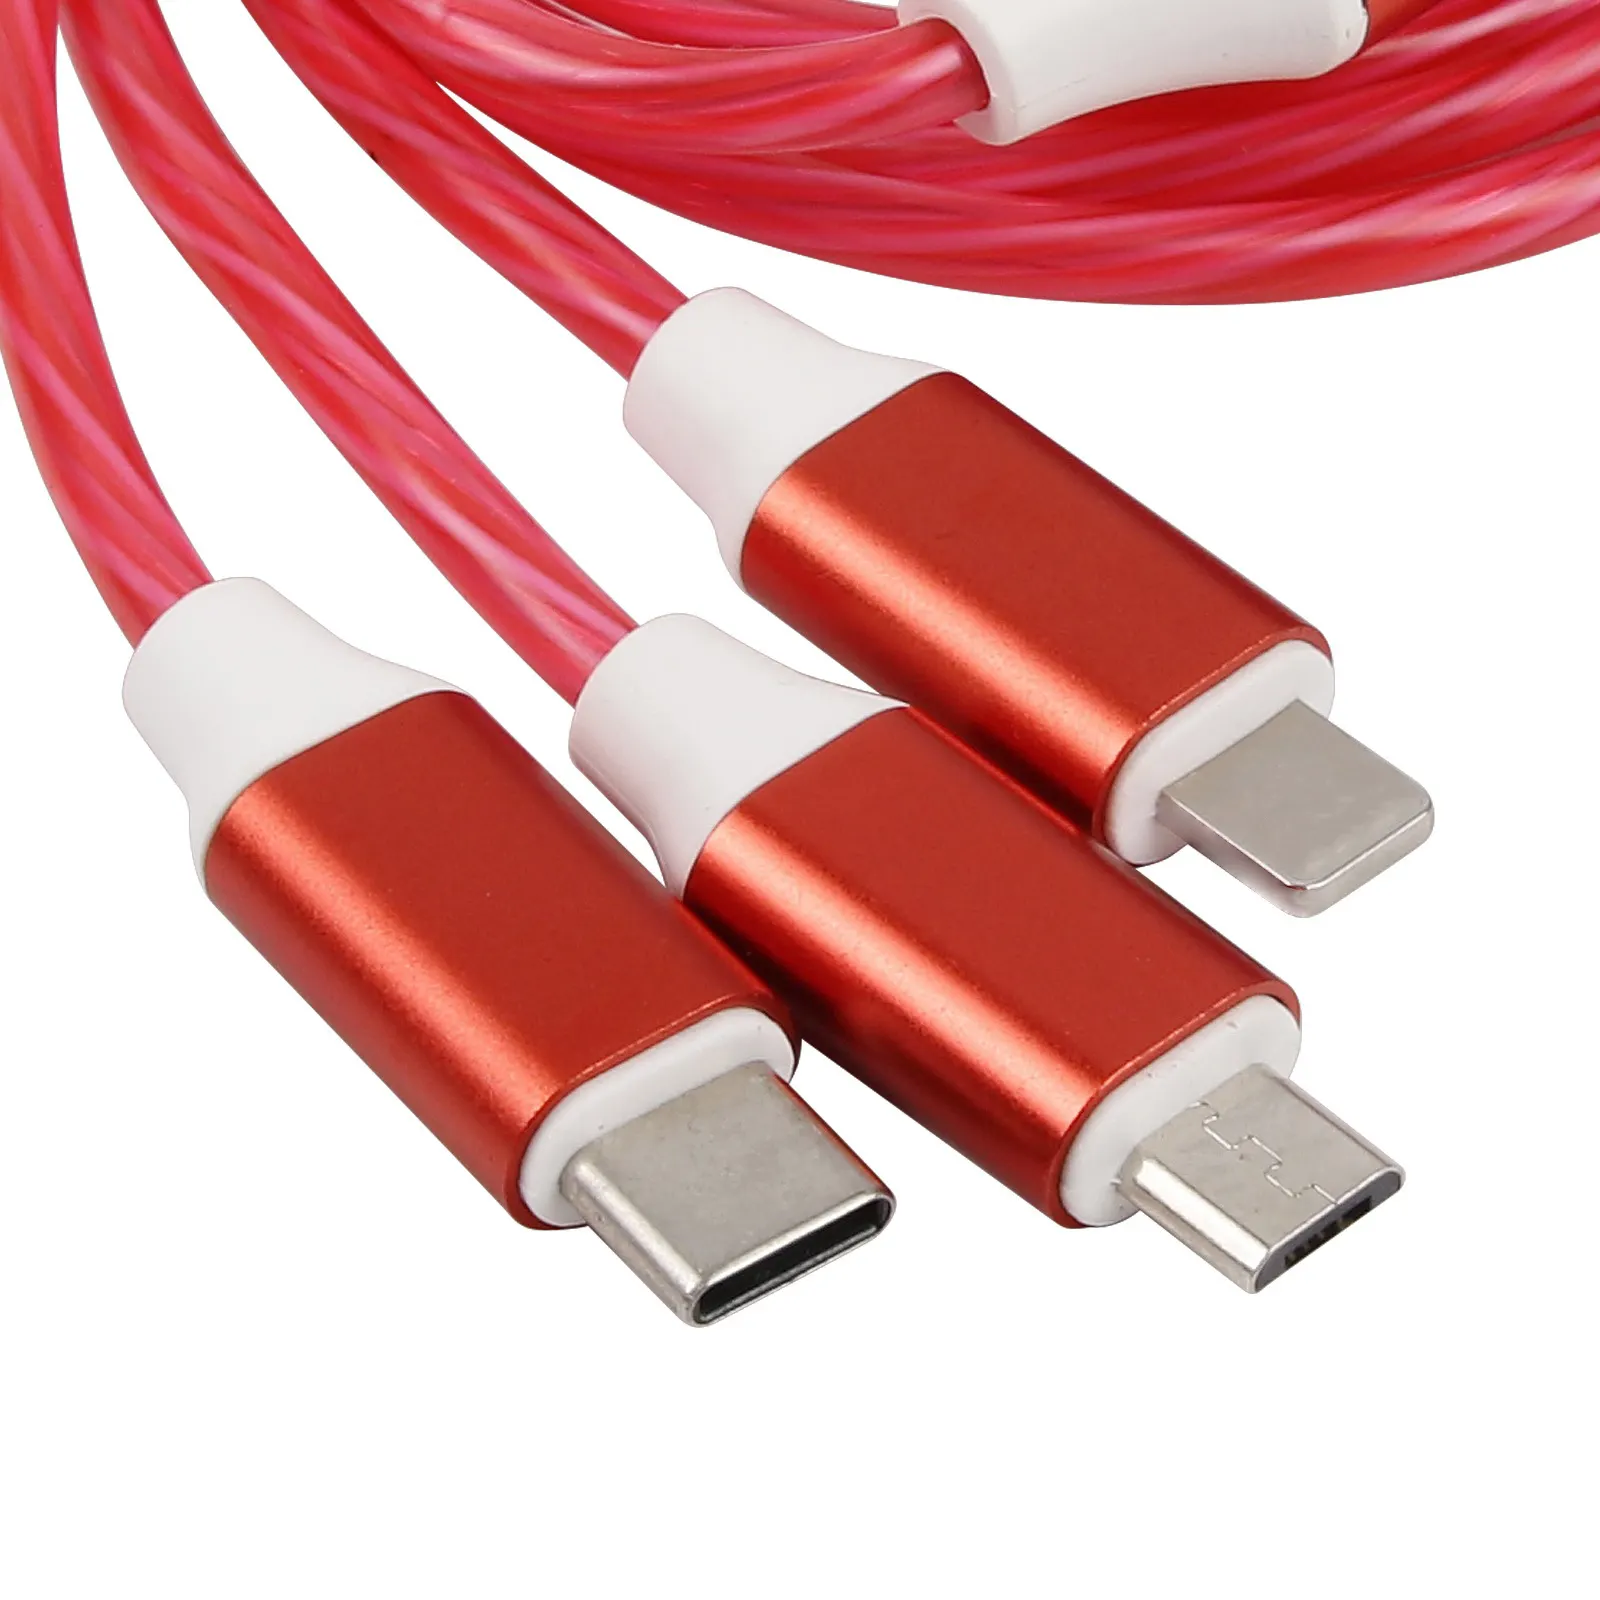 Kabel USB 1.2M lampu mengalir Led, kabel pengisi daya ponsel cepat mengisi daya 3 in 1 bercahaya mikro Tipe C garis kawat